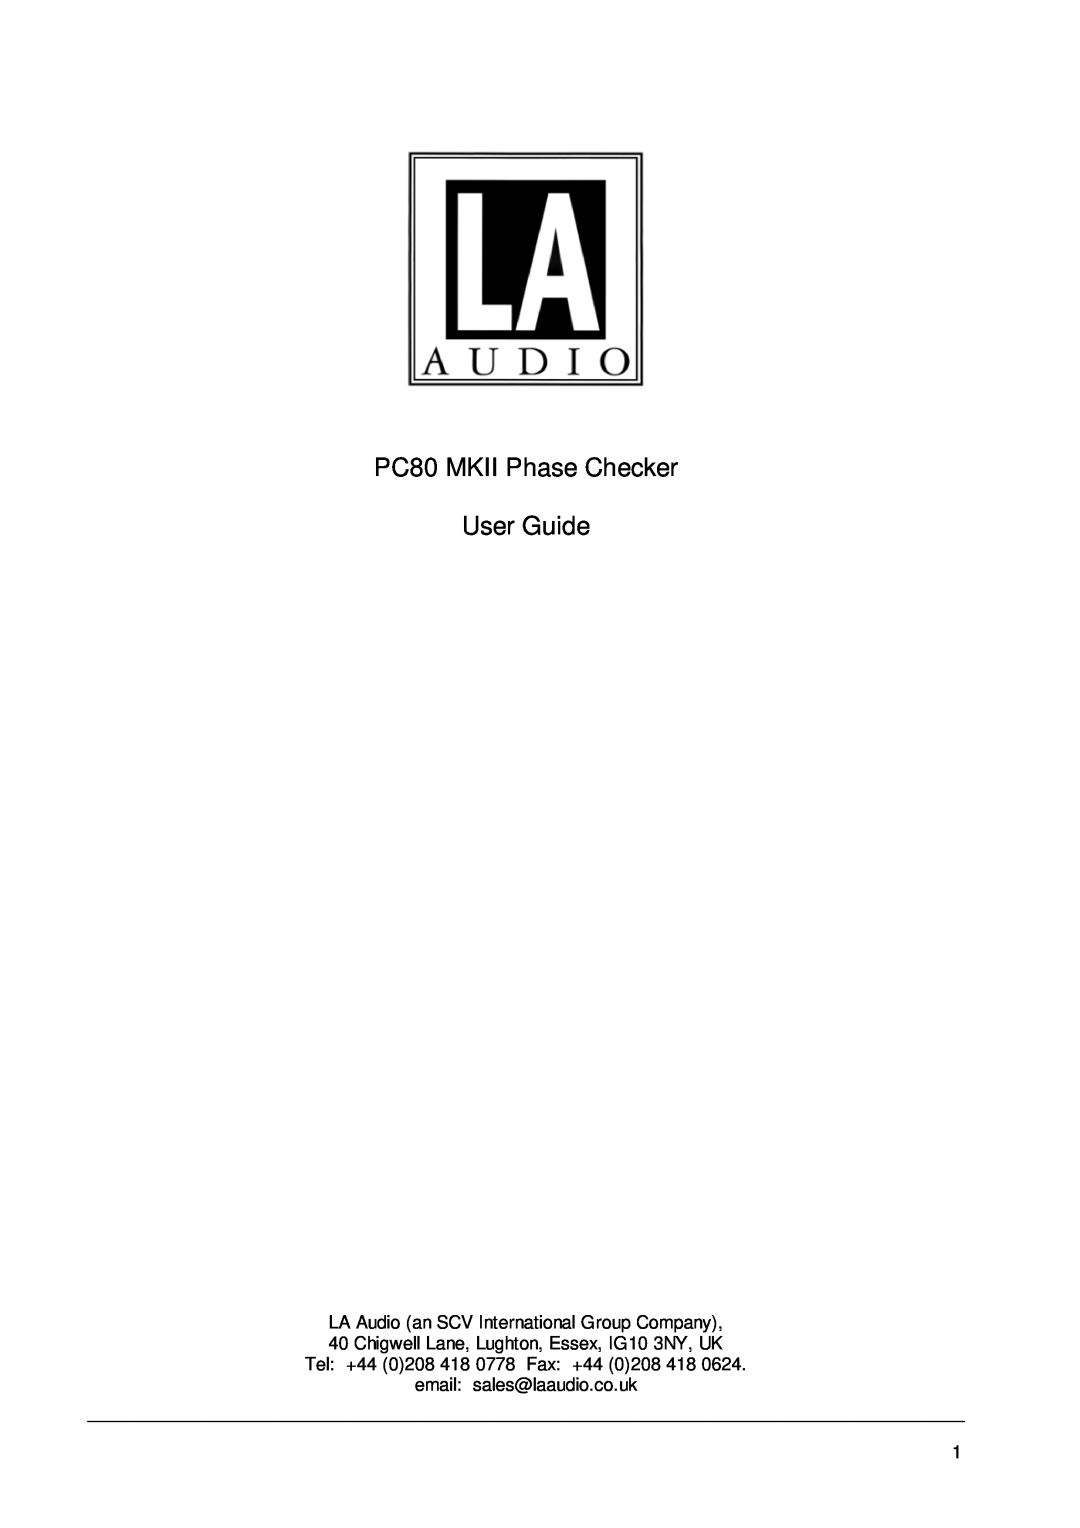 LA Audio Electronic manual PC80 MKII Phase Checker User Guide 